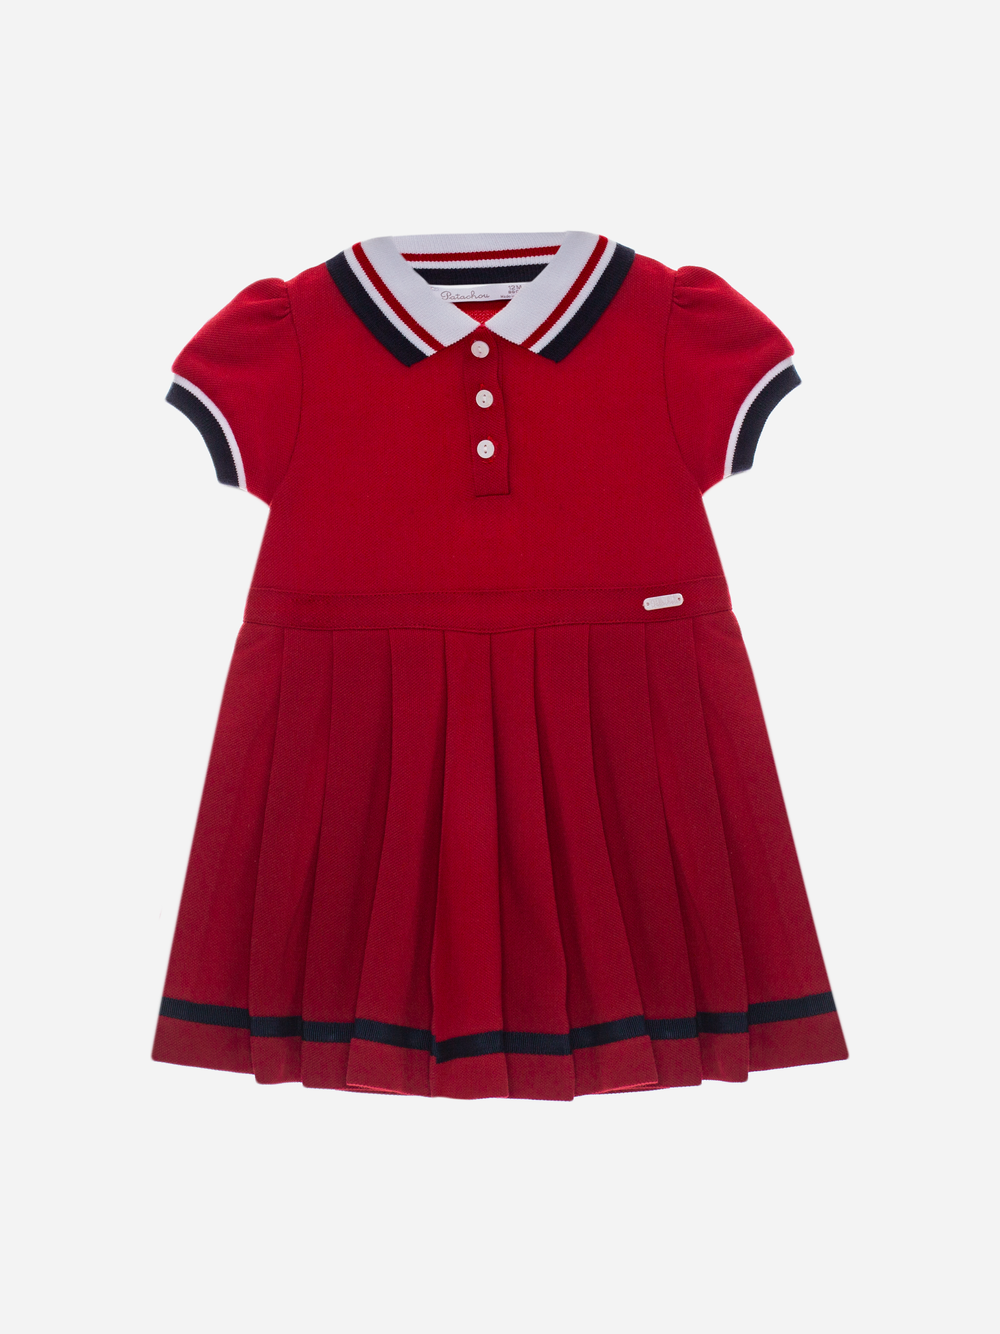 Vestido vermelho de menina